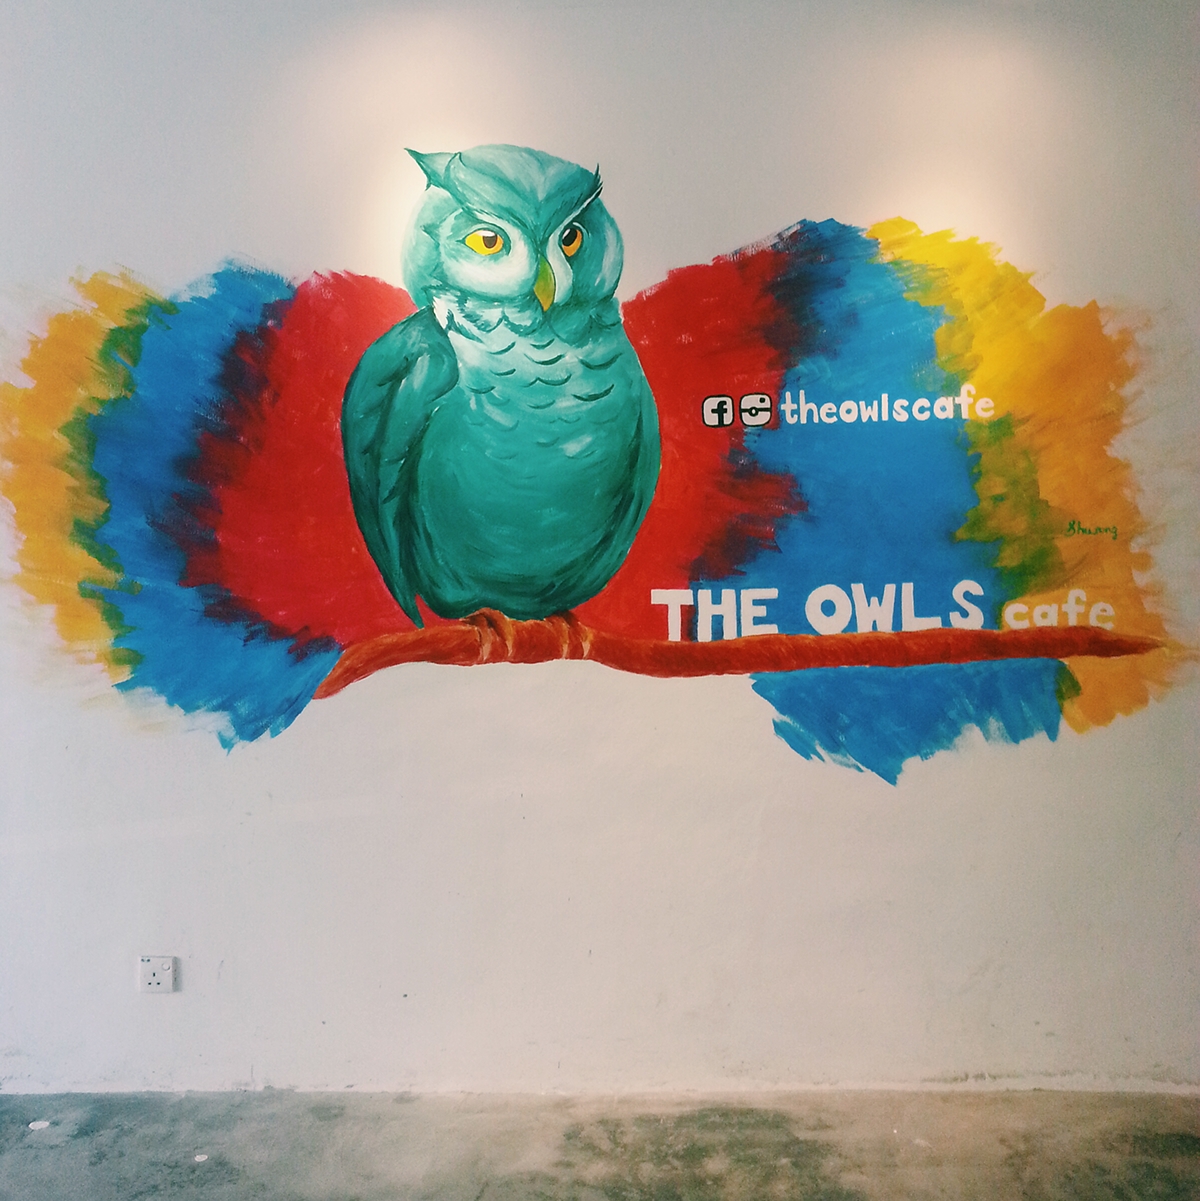 Mural owl cafe coffeeshop malaysia penang art